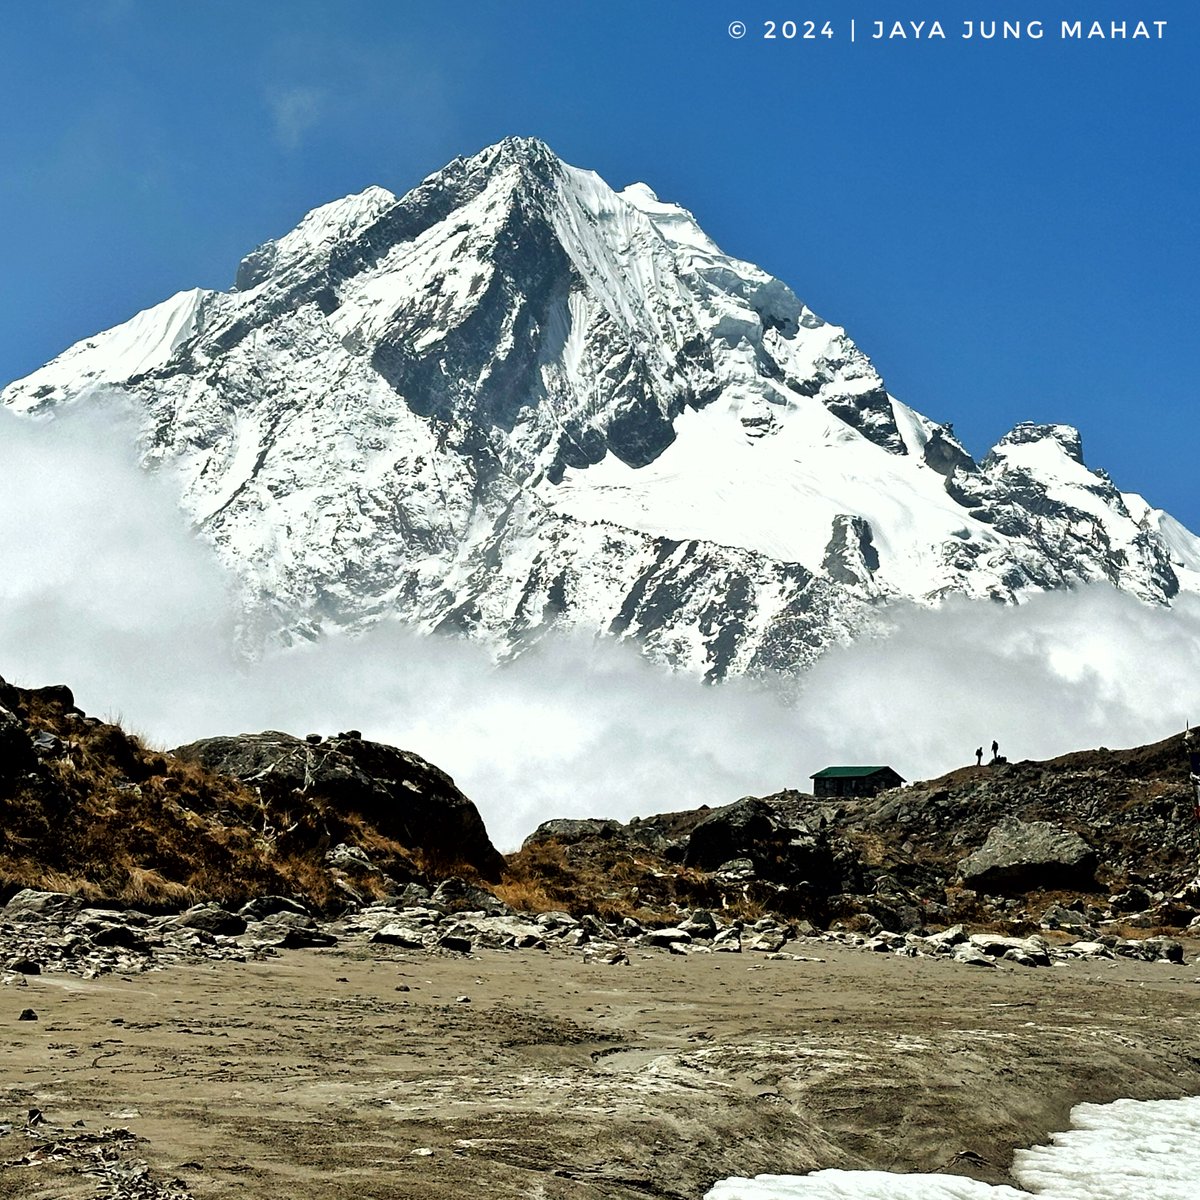 Nepal is heaven for high-altitude adventurous treks!

#TrekkinginNepal